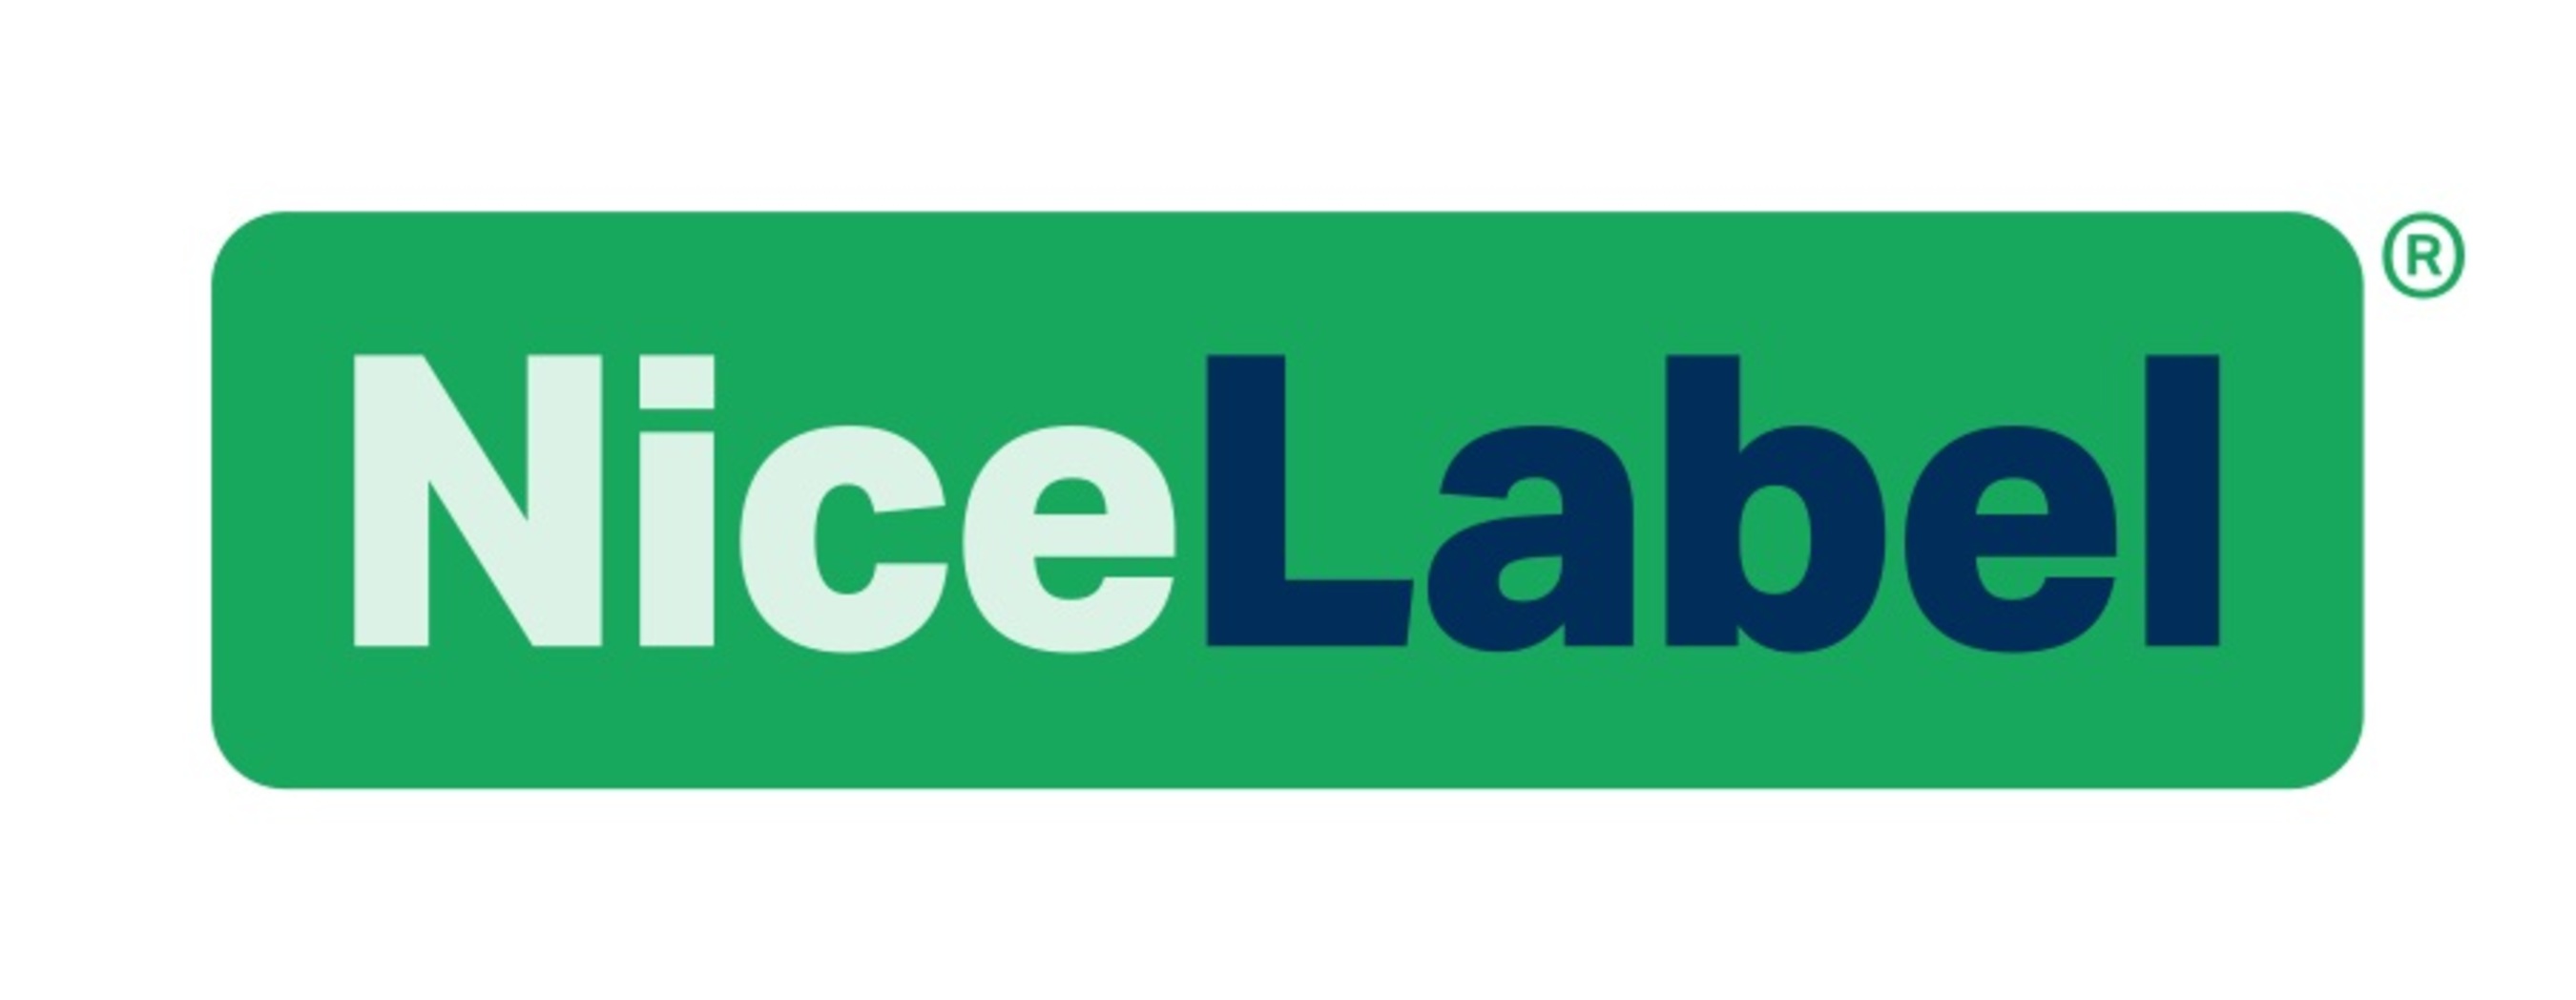 NiceLabel logo.